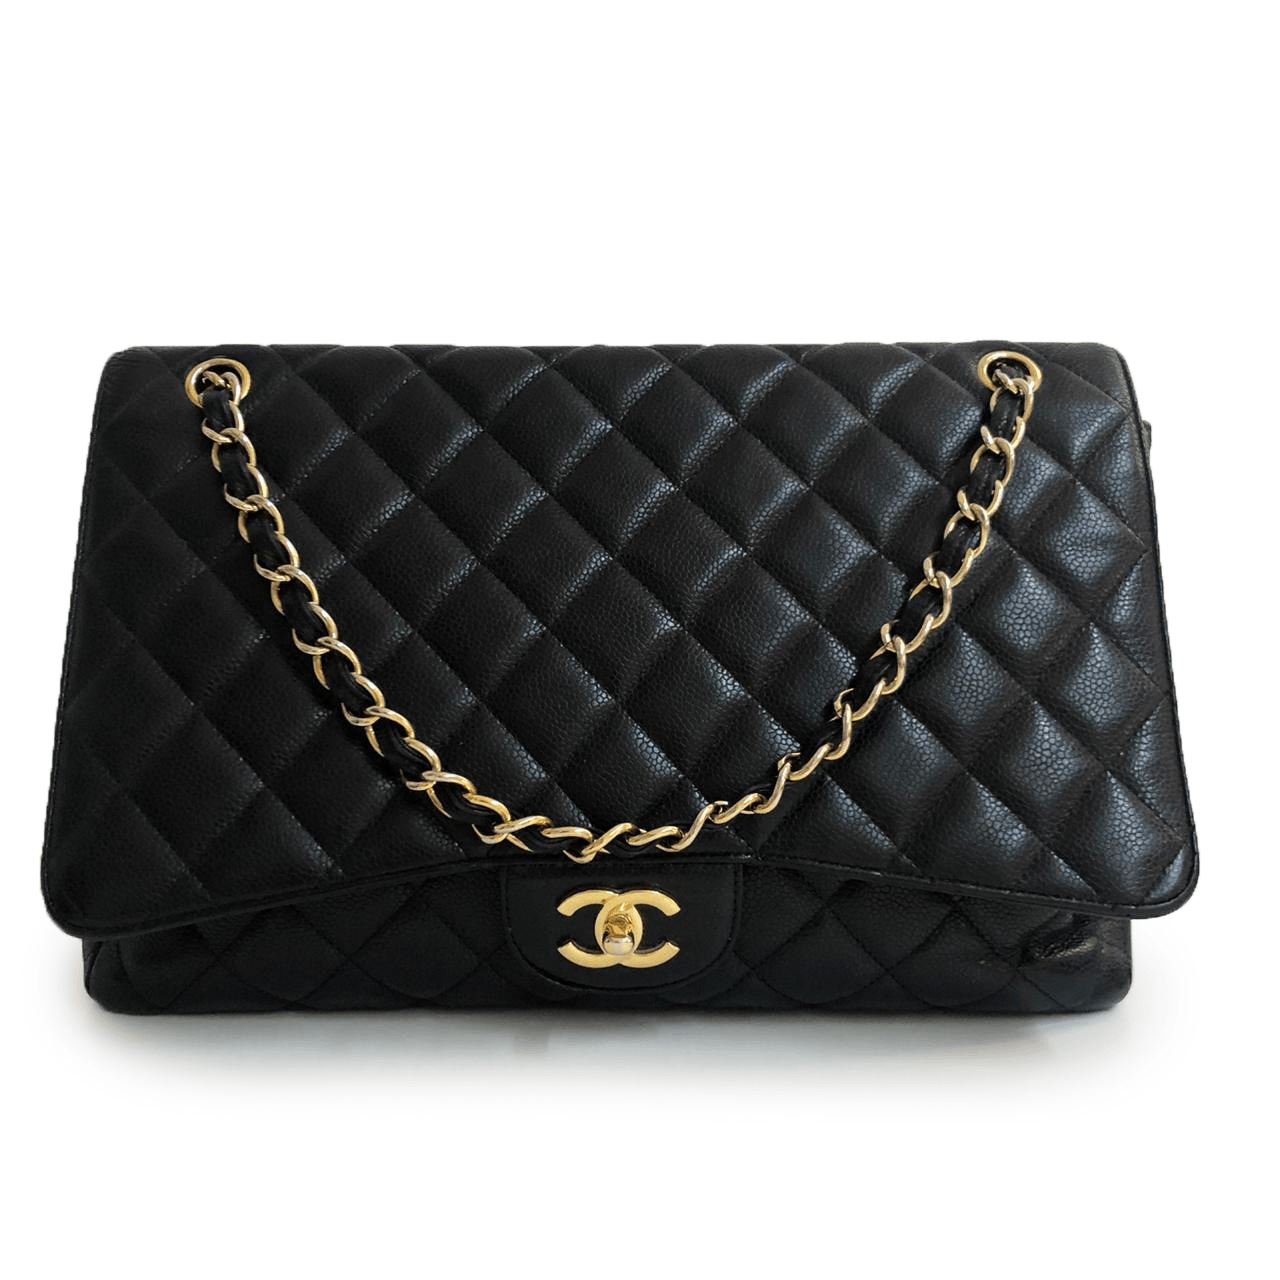 Chanel Black Caviar Leather Maxi Flap Bag